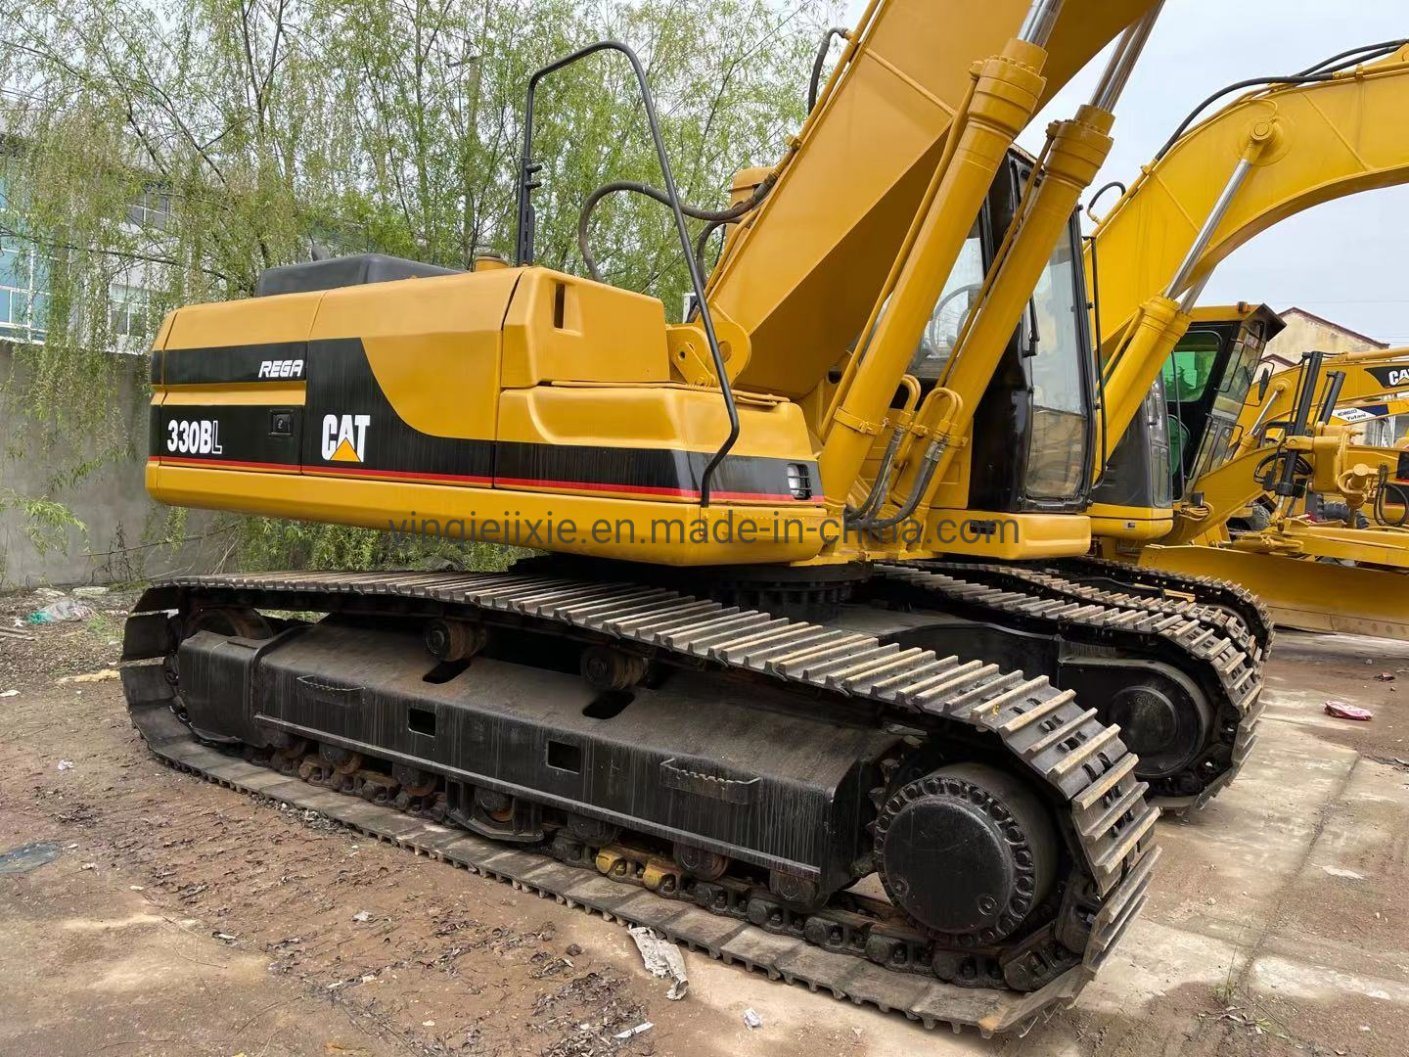 Used Tracked Excavator Caterpillar 330bl Hydraulic Excavator Cat 330bl Excavator Cat Excavator